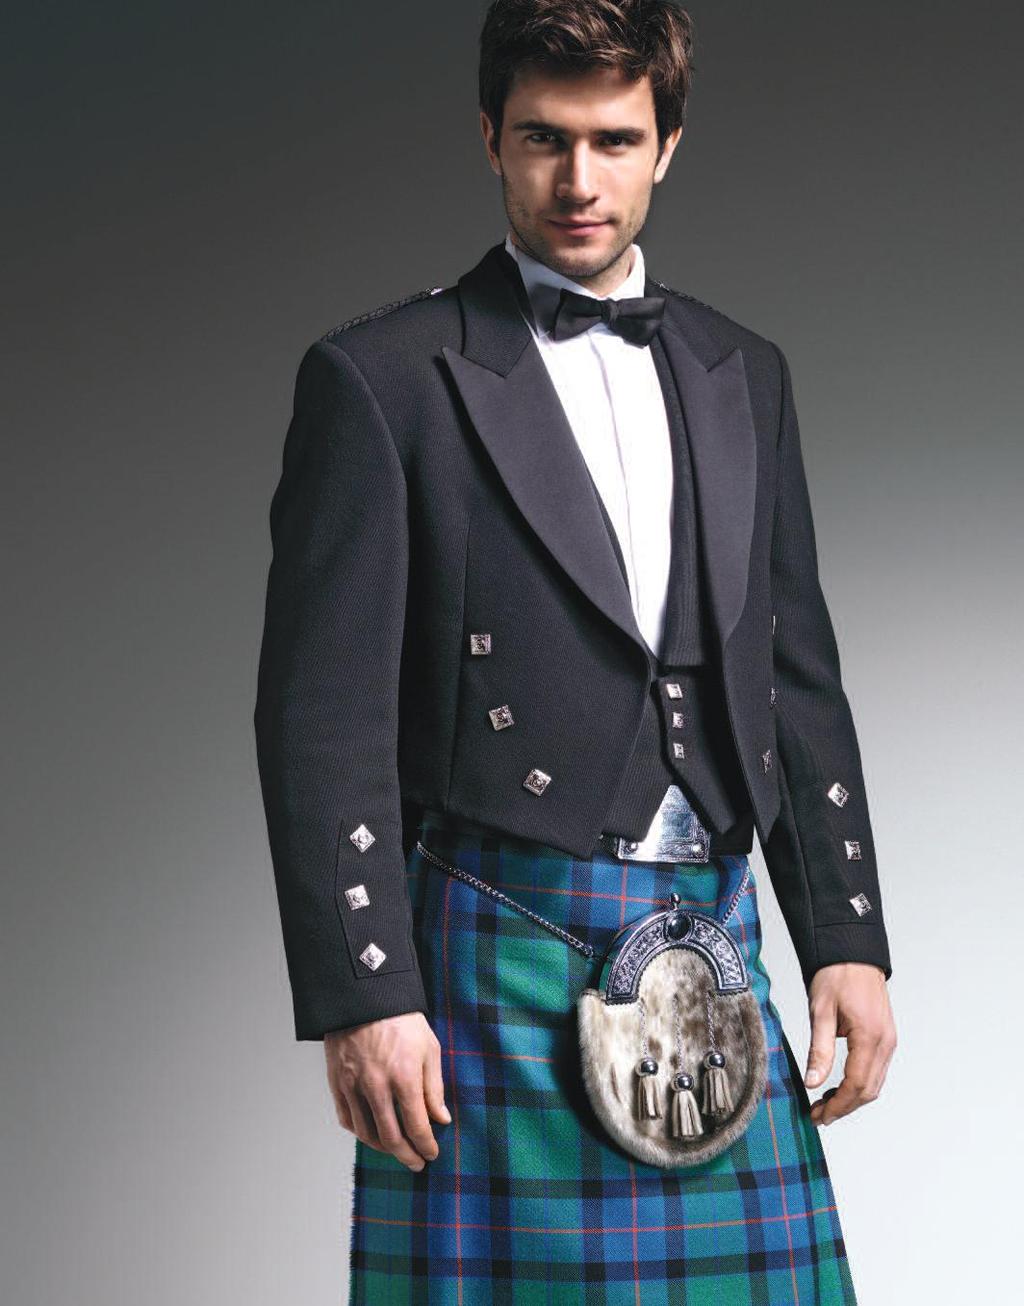 Flower of Scotland Kilt 12 Worn with Black Prince Charlie Jacket, matching